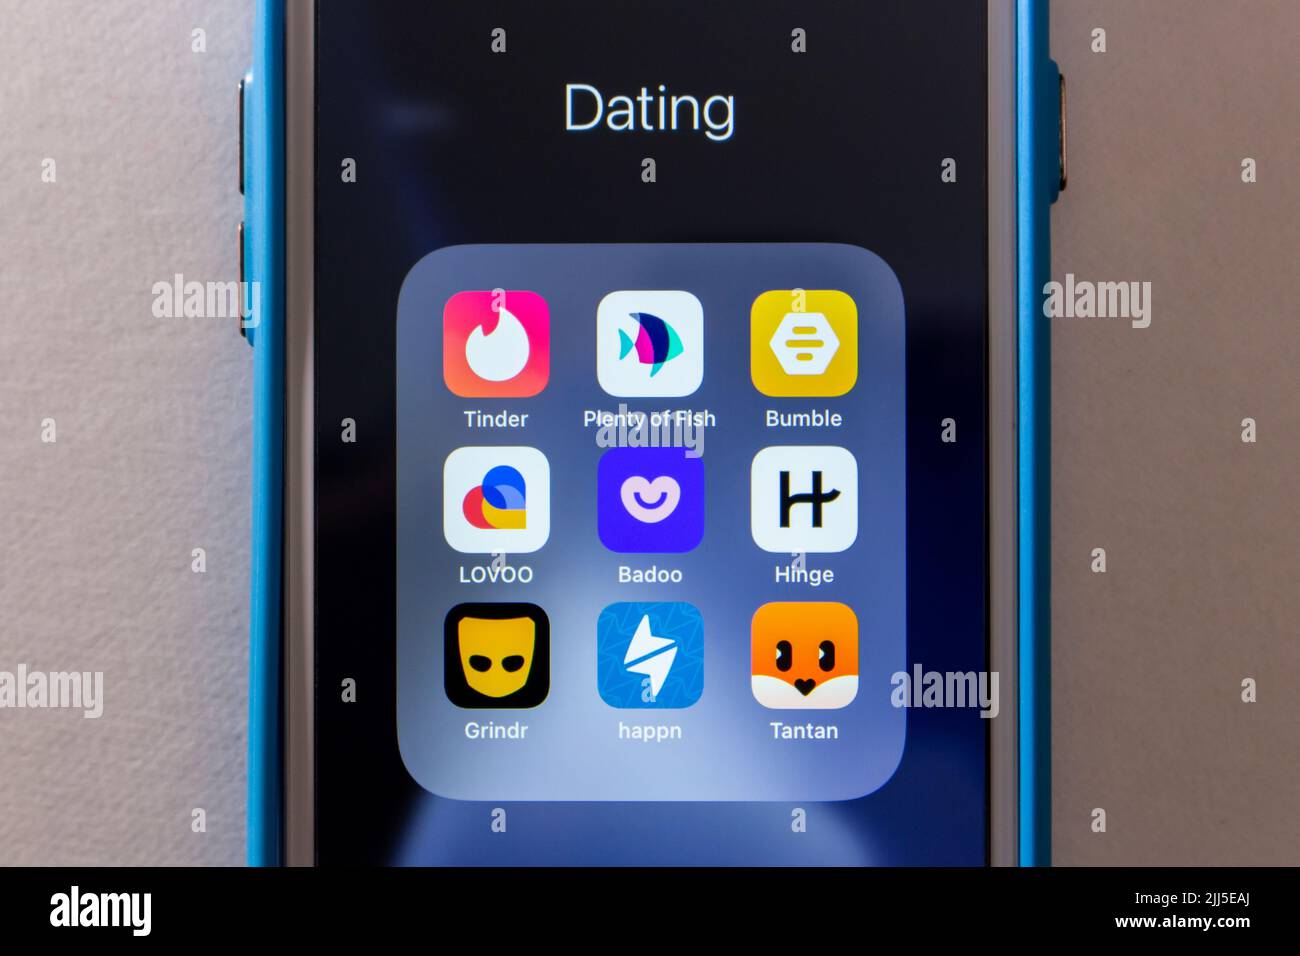 Kumamoto, JAPAN - Jun 27 2022 : Closeup popular dating apps Tinder, Plenty of Fish, Bumble app, LOVOO, Badoo, Hinge app, Grindr, Happn and Tantan on a Stock Photo